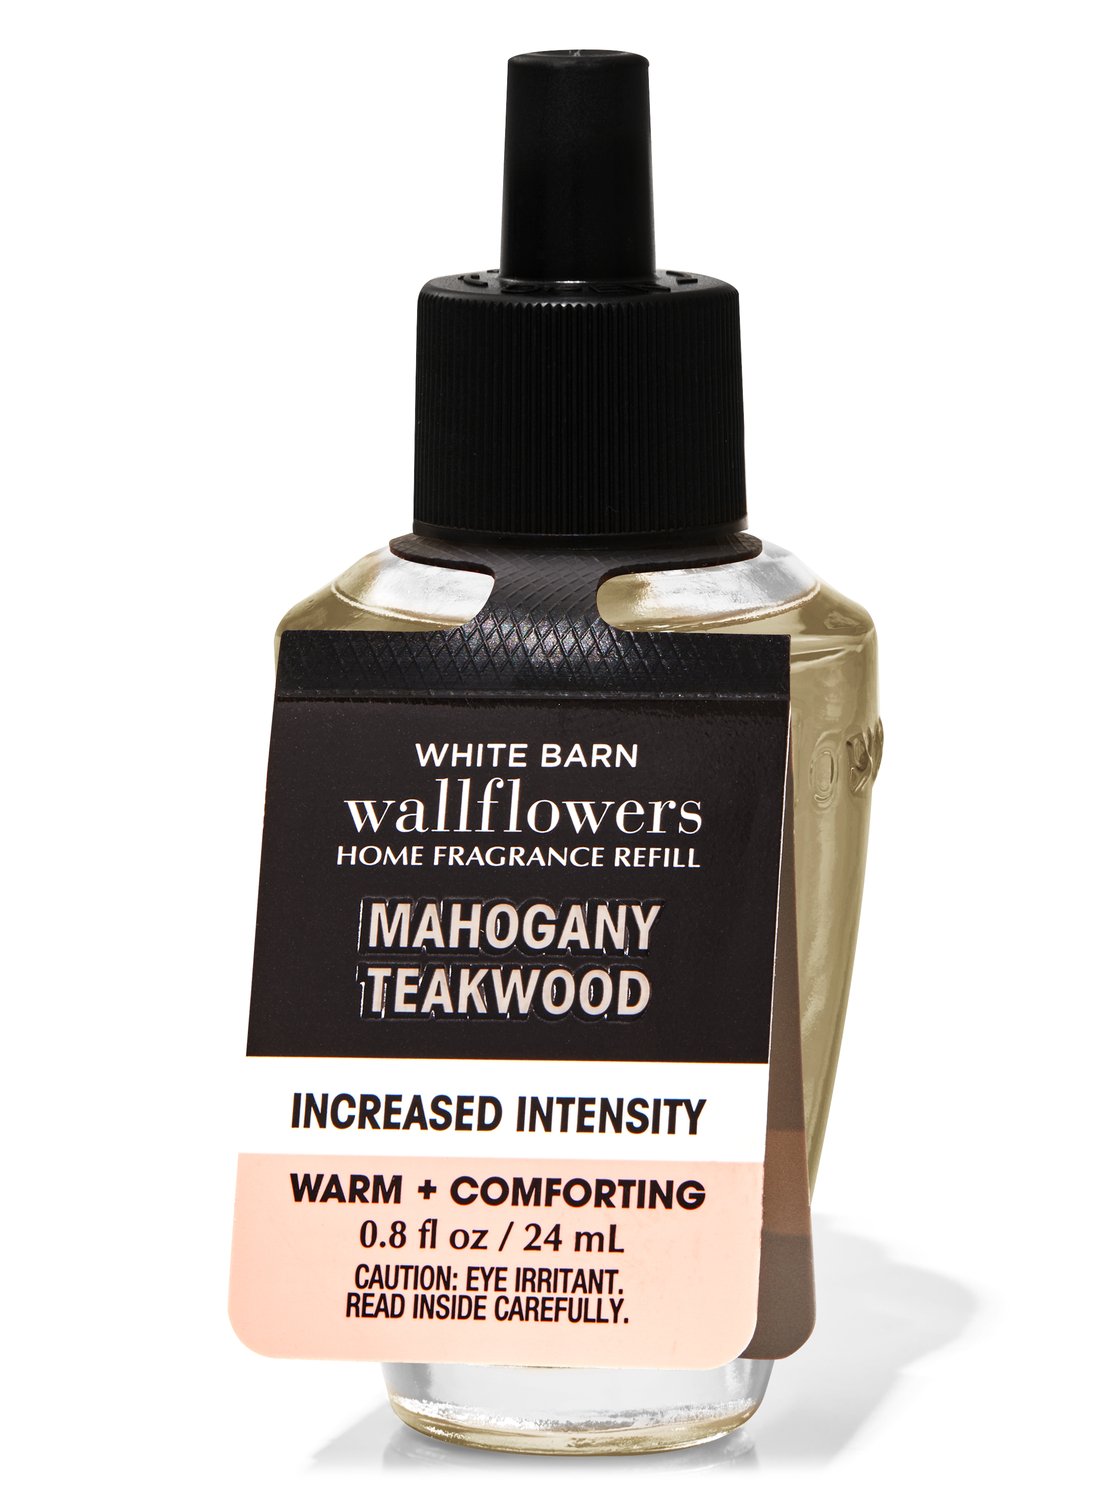 Buy Mahogany Teakwood Car Fragrance Refill online in Dubai, Abu dhabi